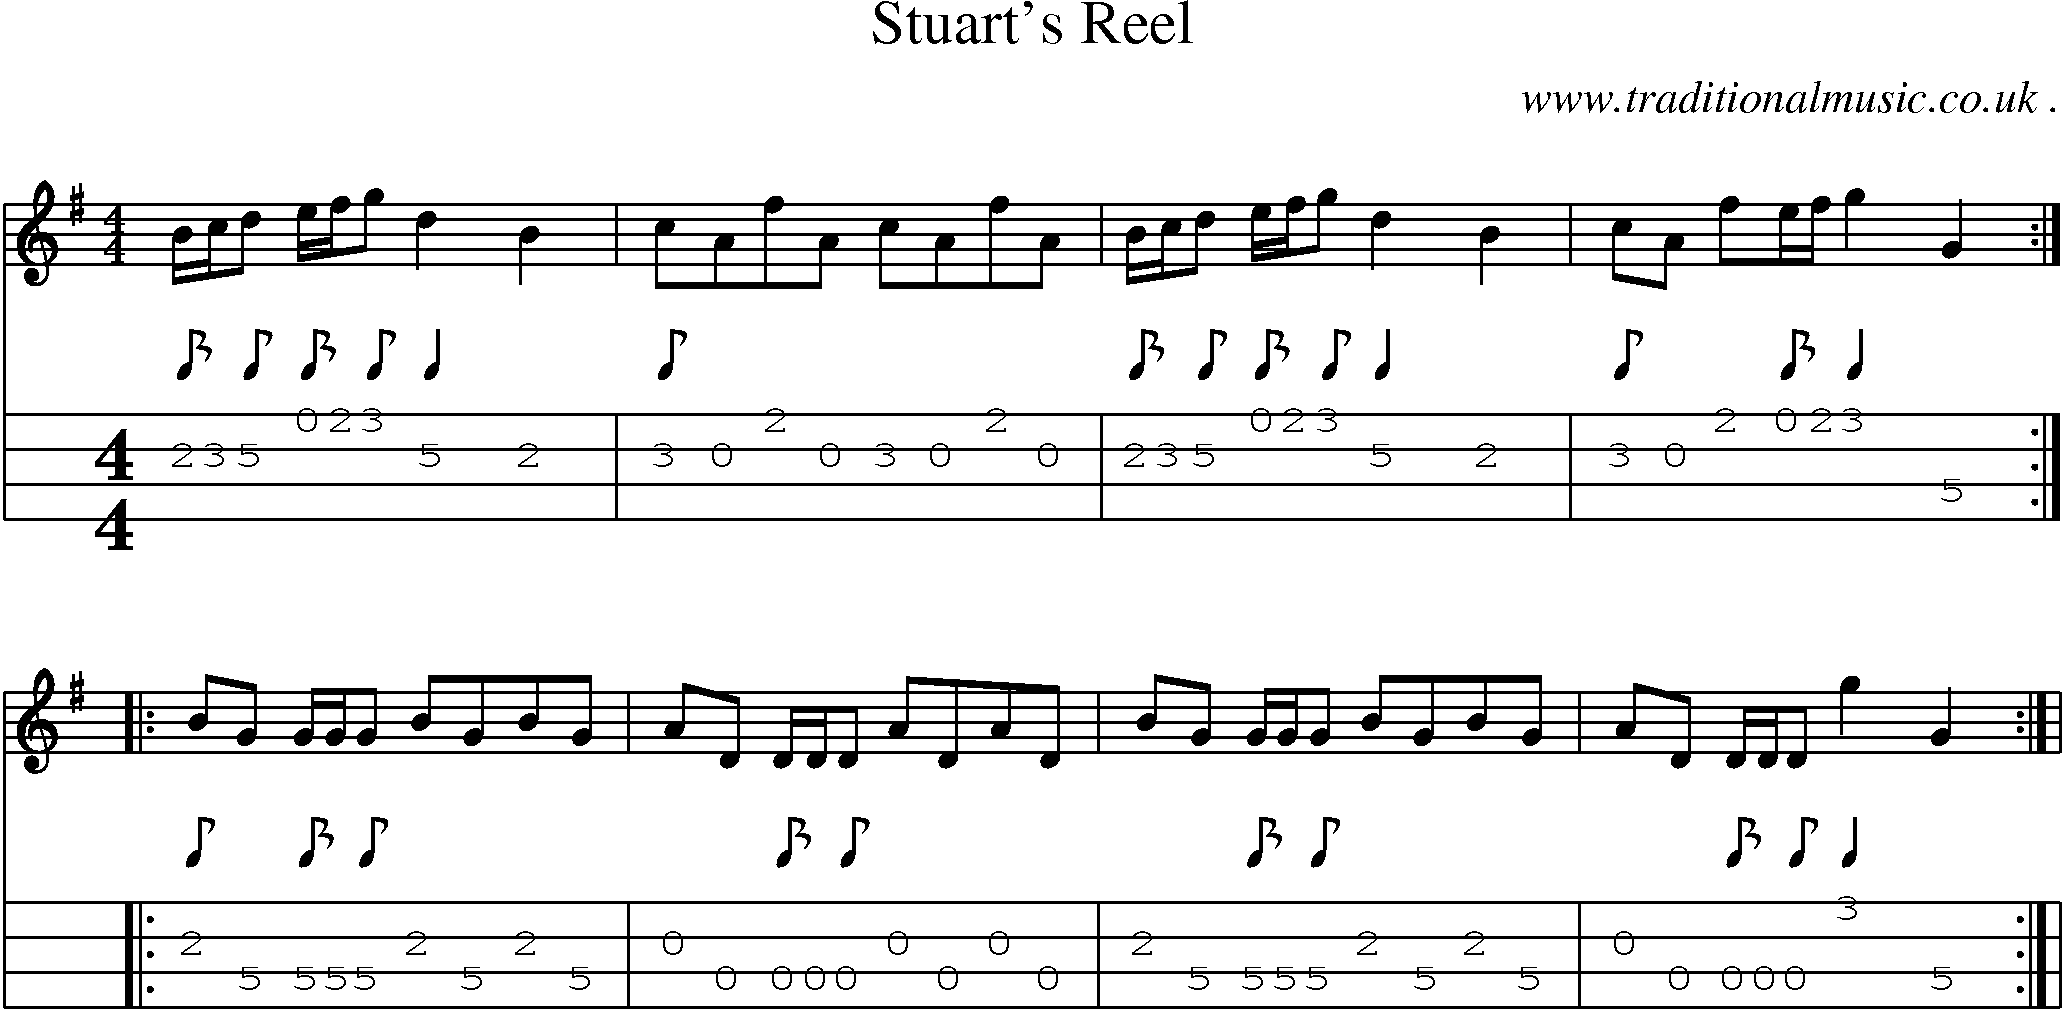 Sheet-Music and Mandolin Tabs for Stuarts Reel